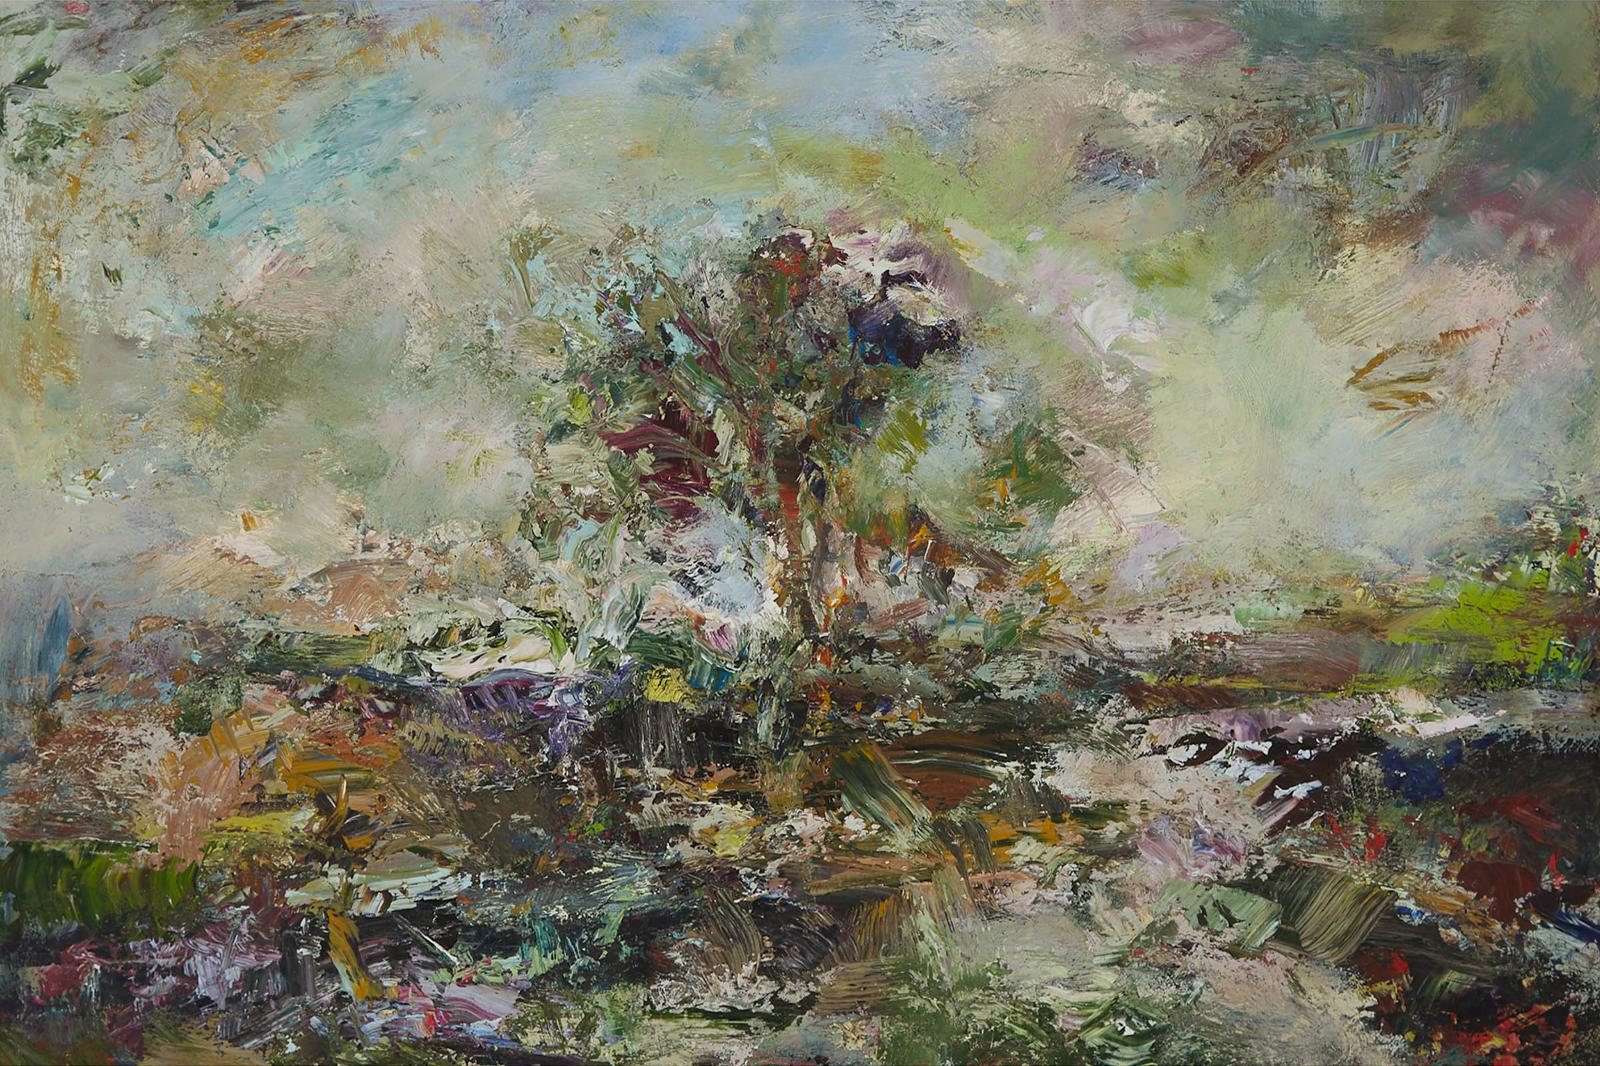 Michael Smith (1951) - English Landscape #3, 2005